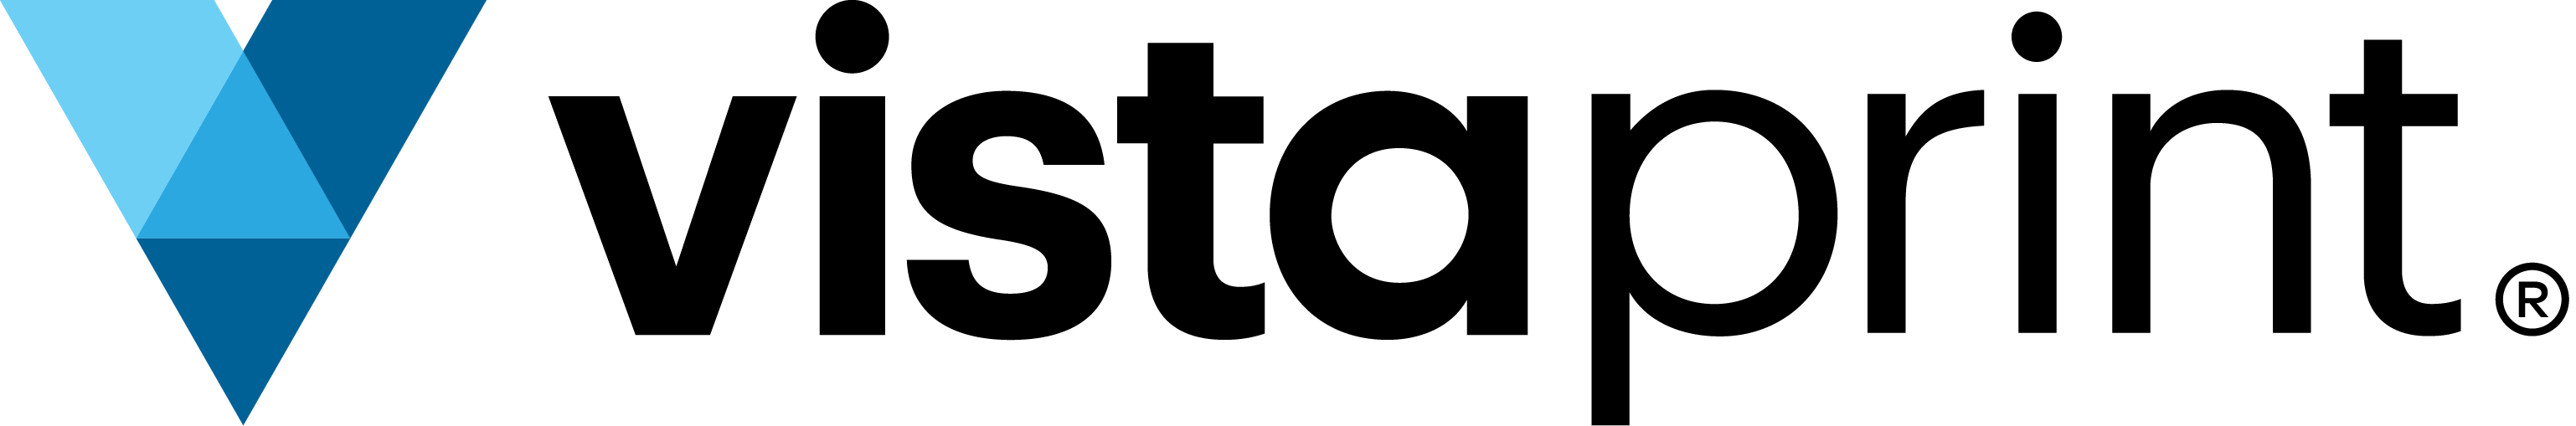 Vista print logo